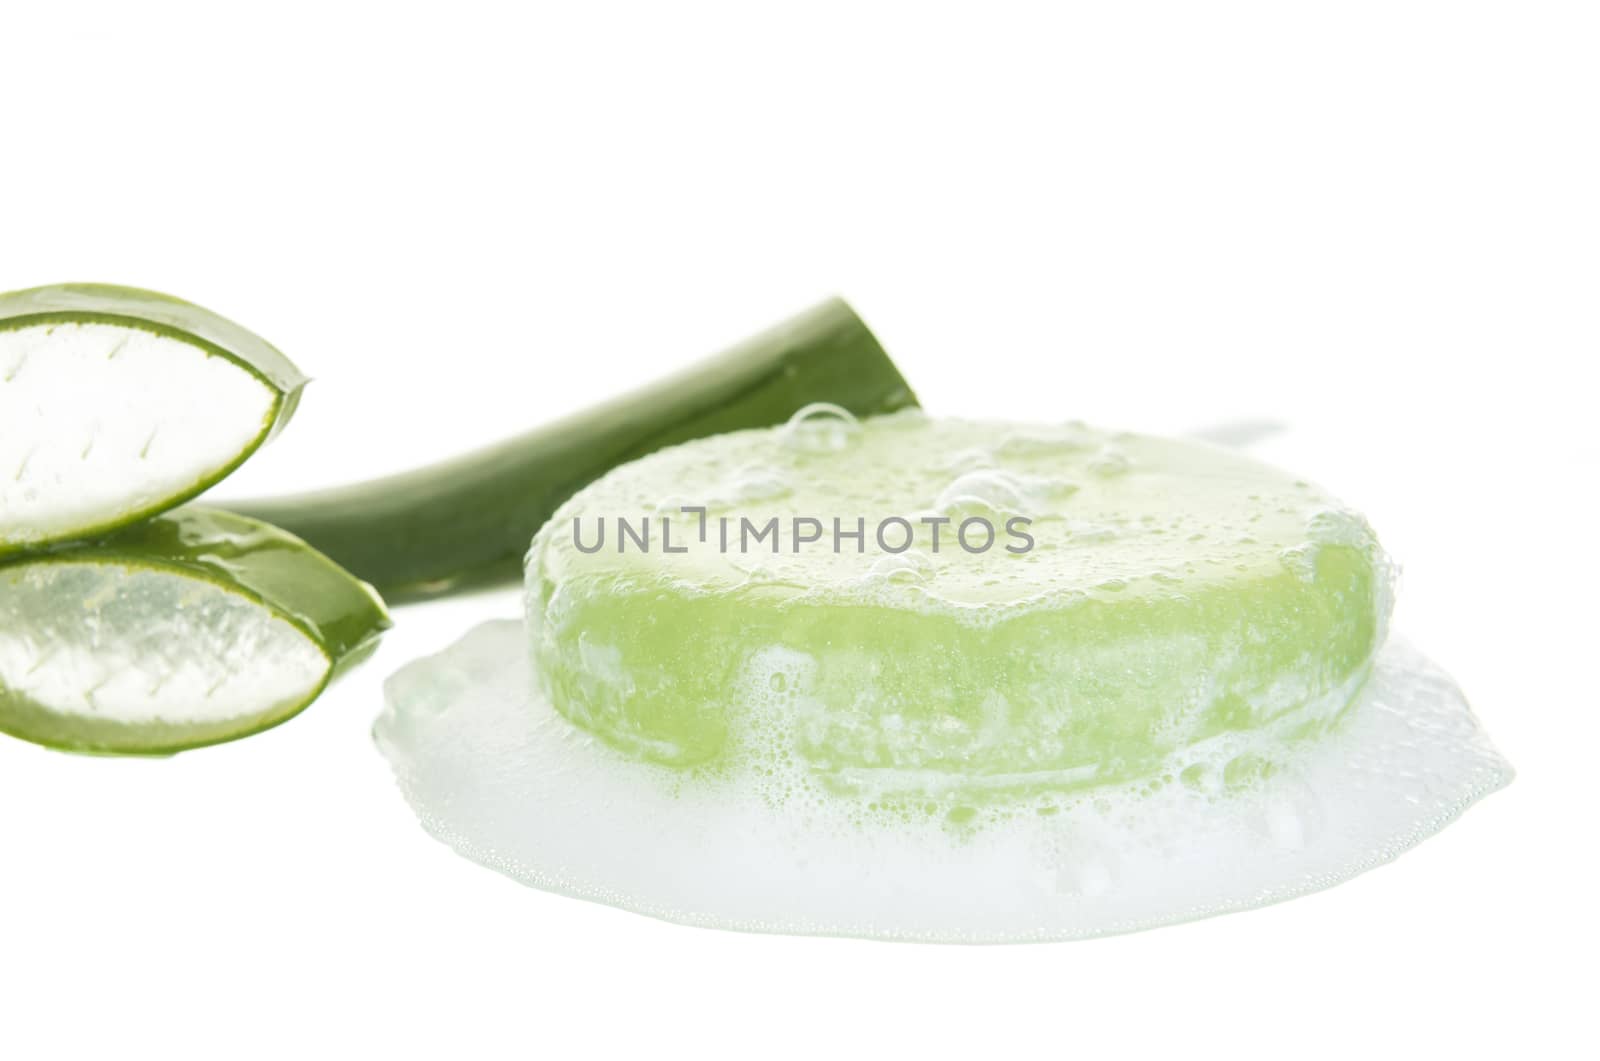 Spa concept with aloe vera soap, moisturizing the skin, reduce wrinkles.